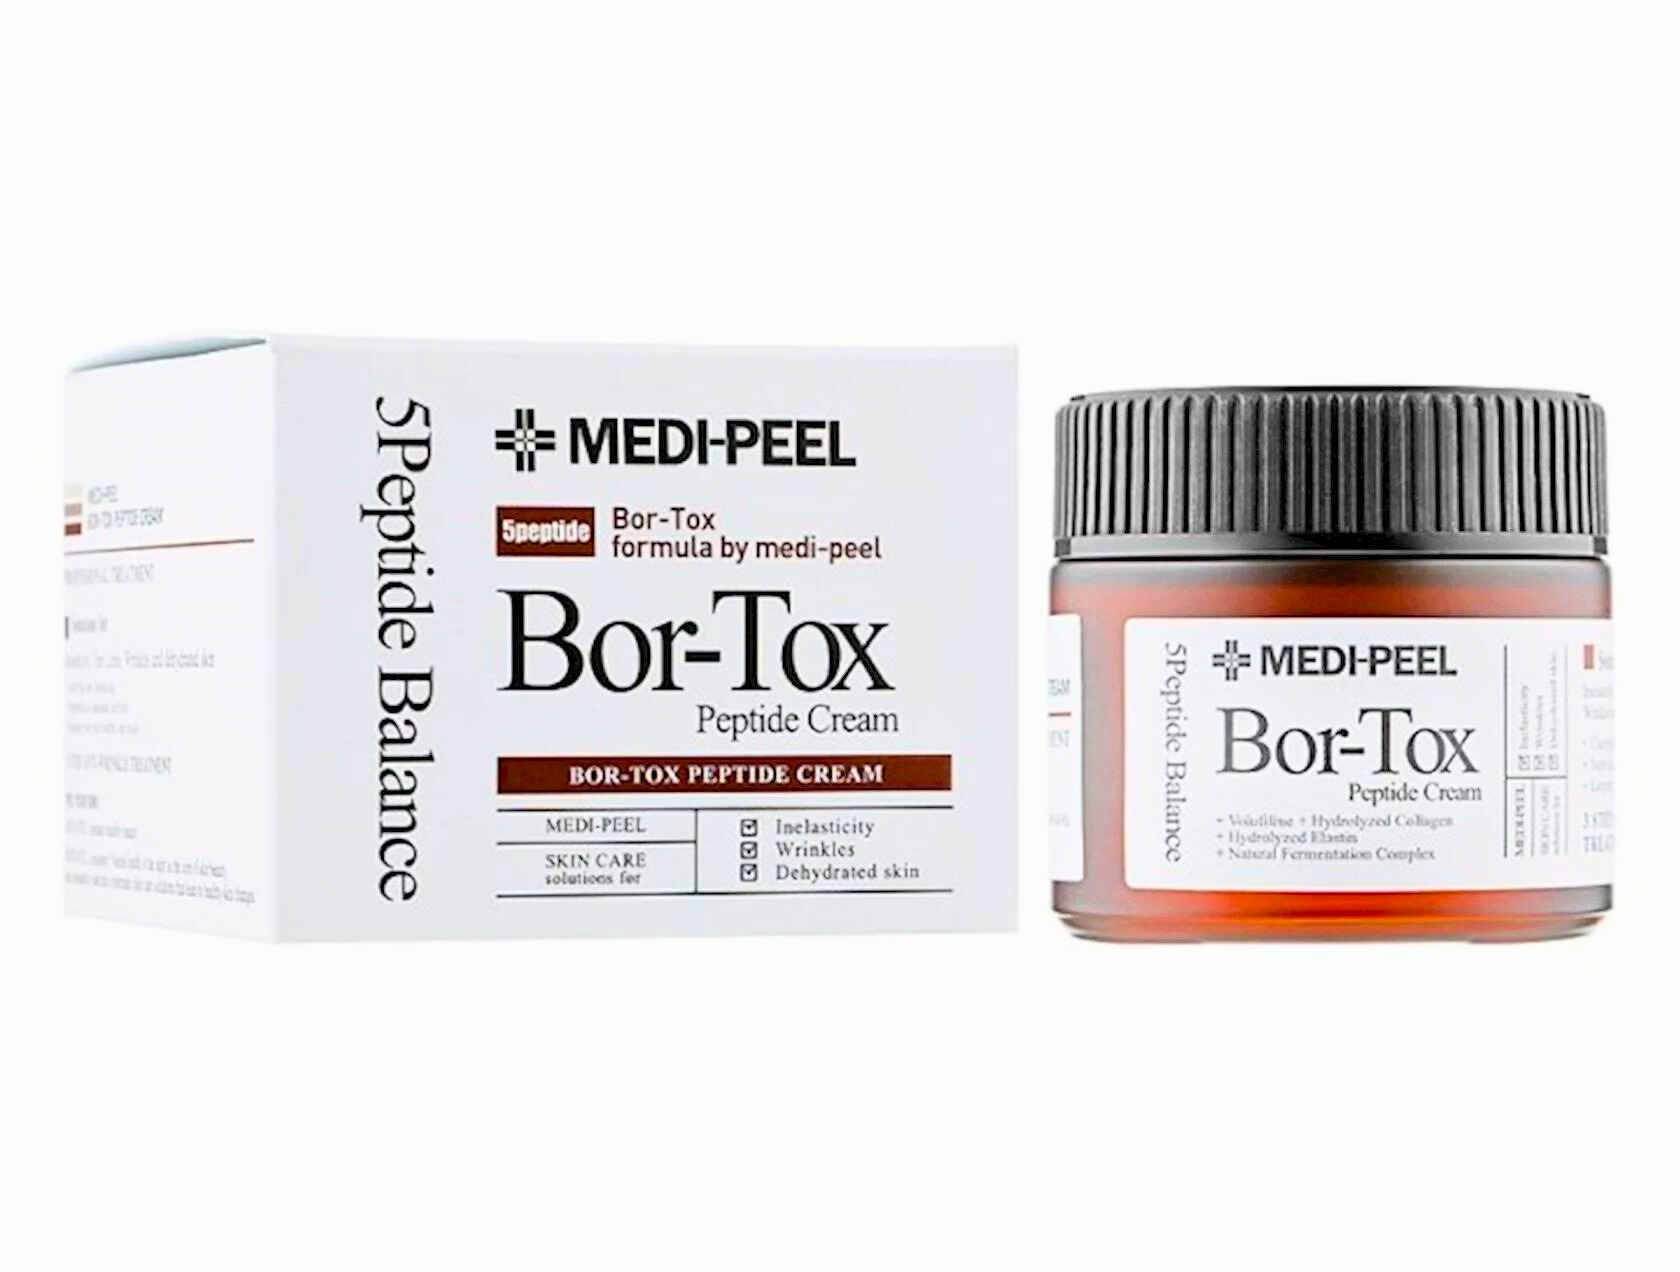 Medi-Peel Bor-Tox Peptide Kream